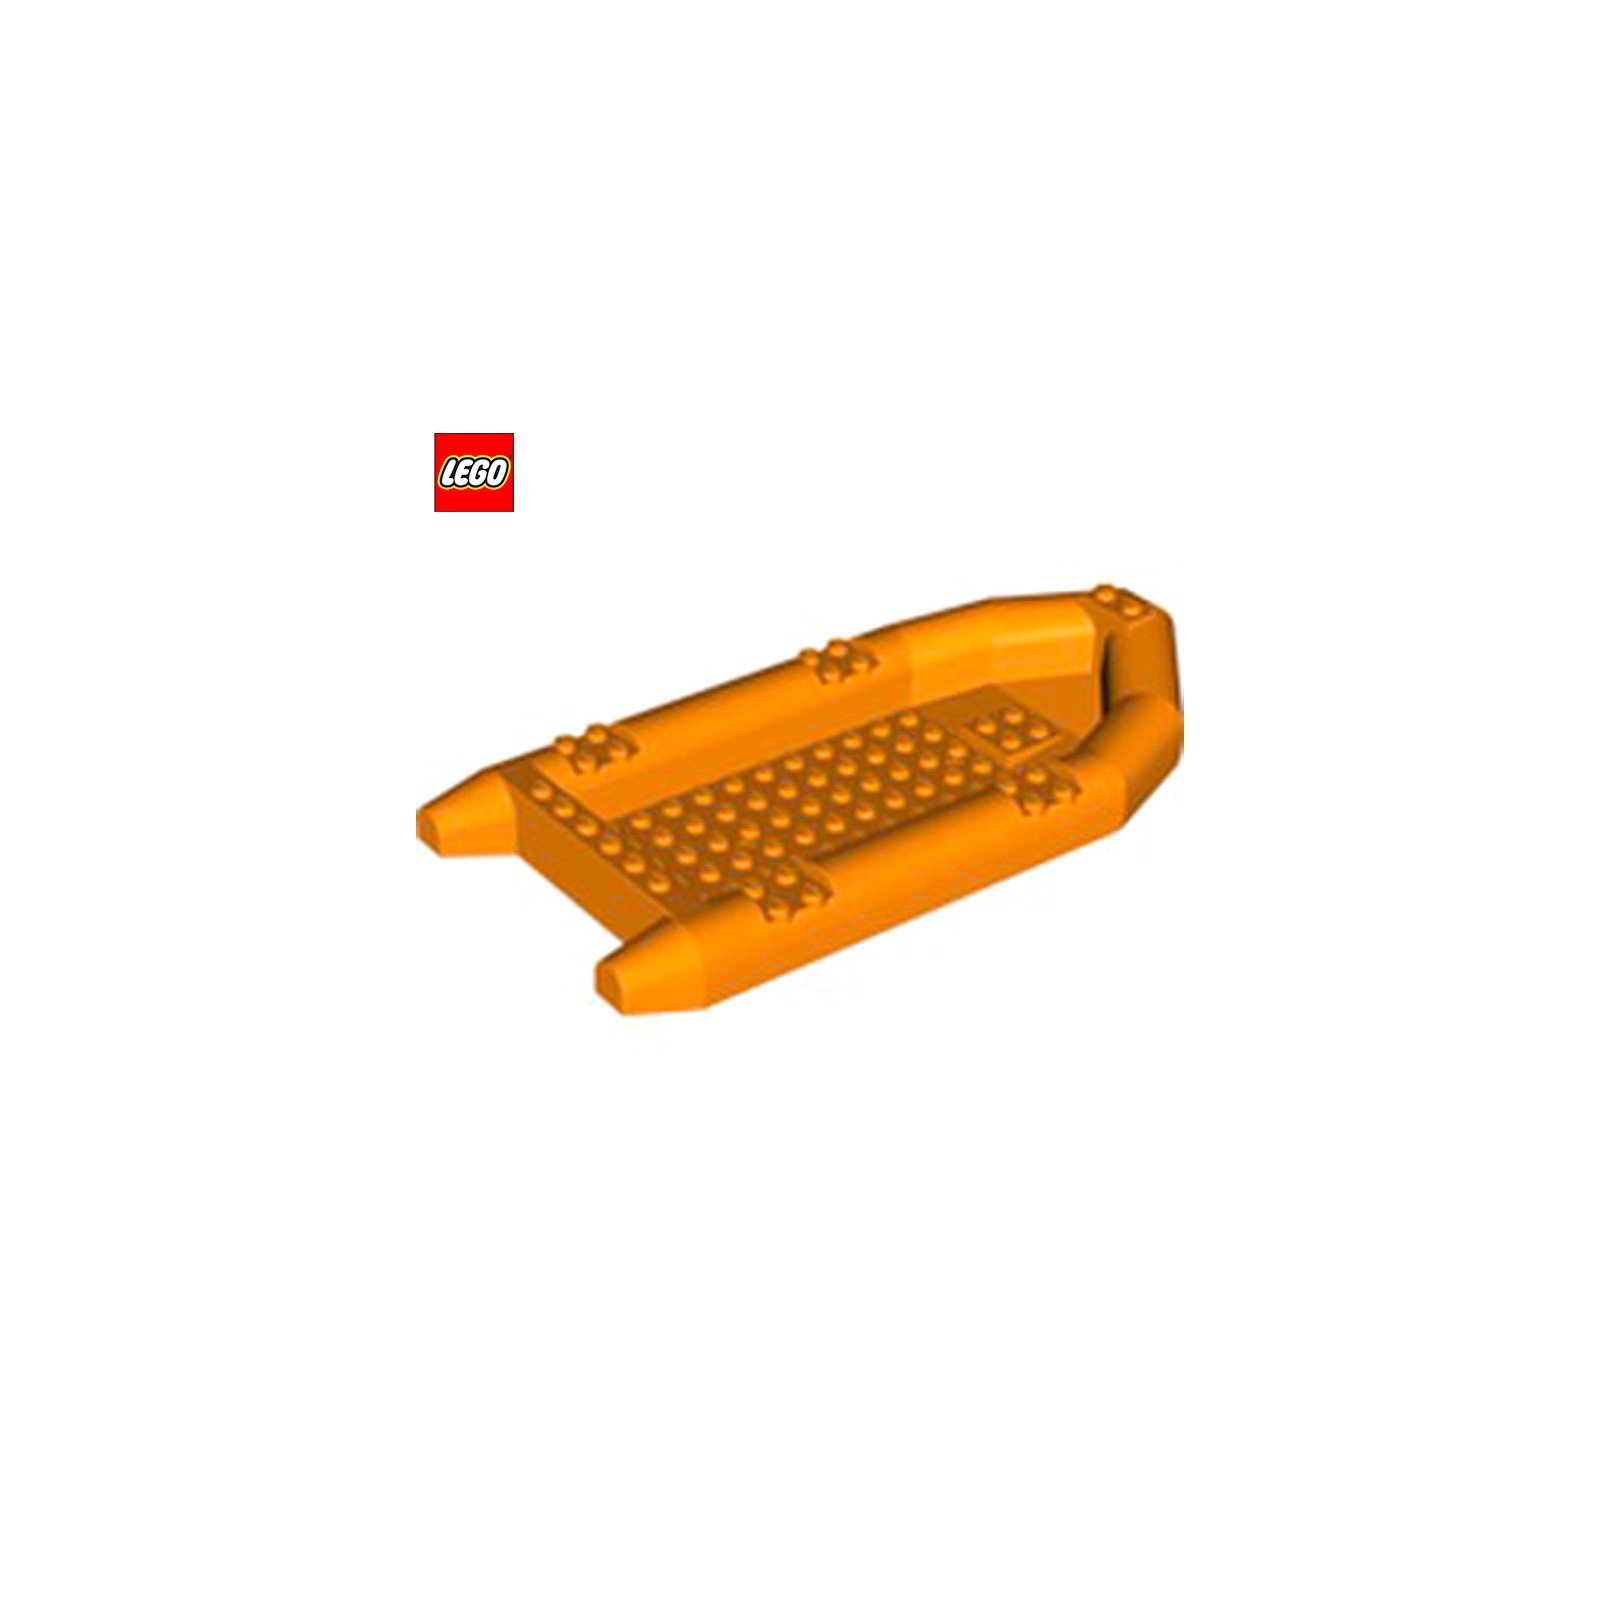 Rubber Raft - Dinghy Boat 22x10x3 - LEGO® 62812